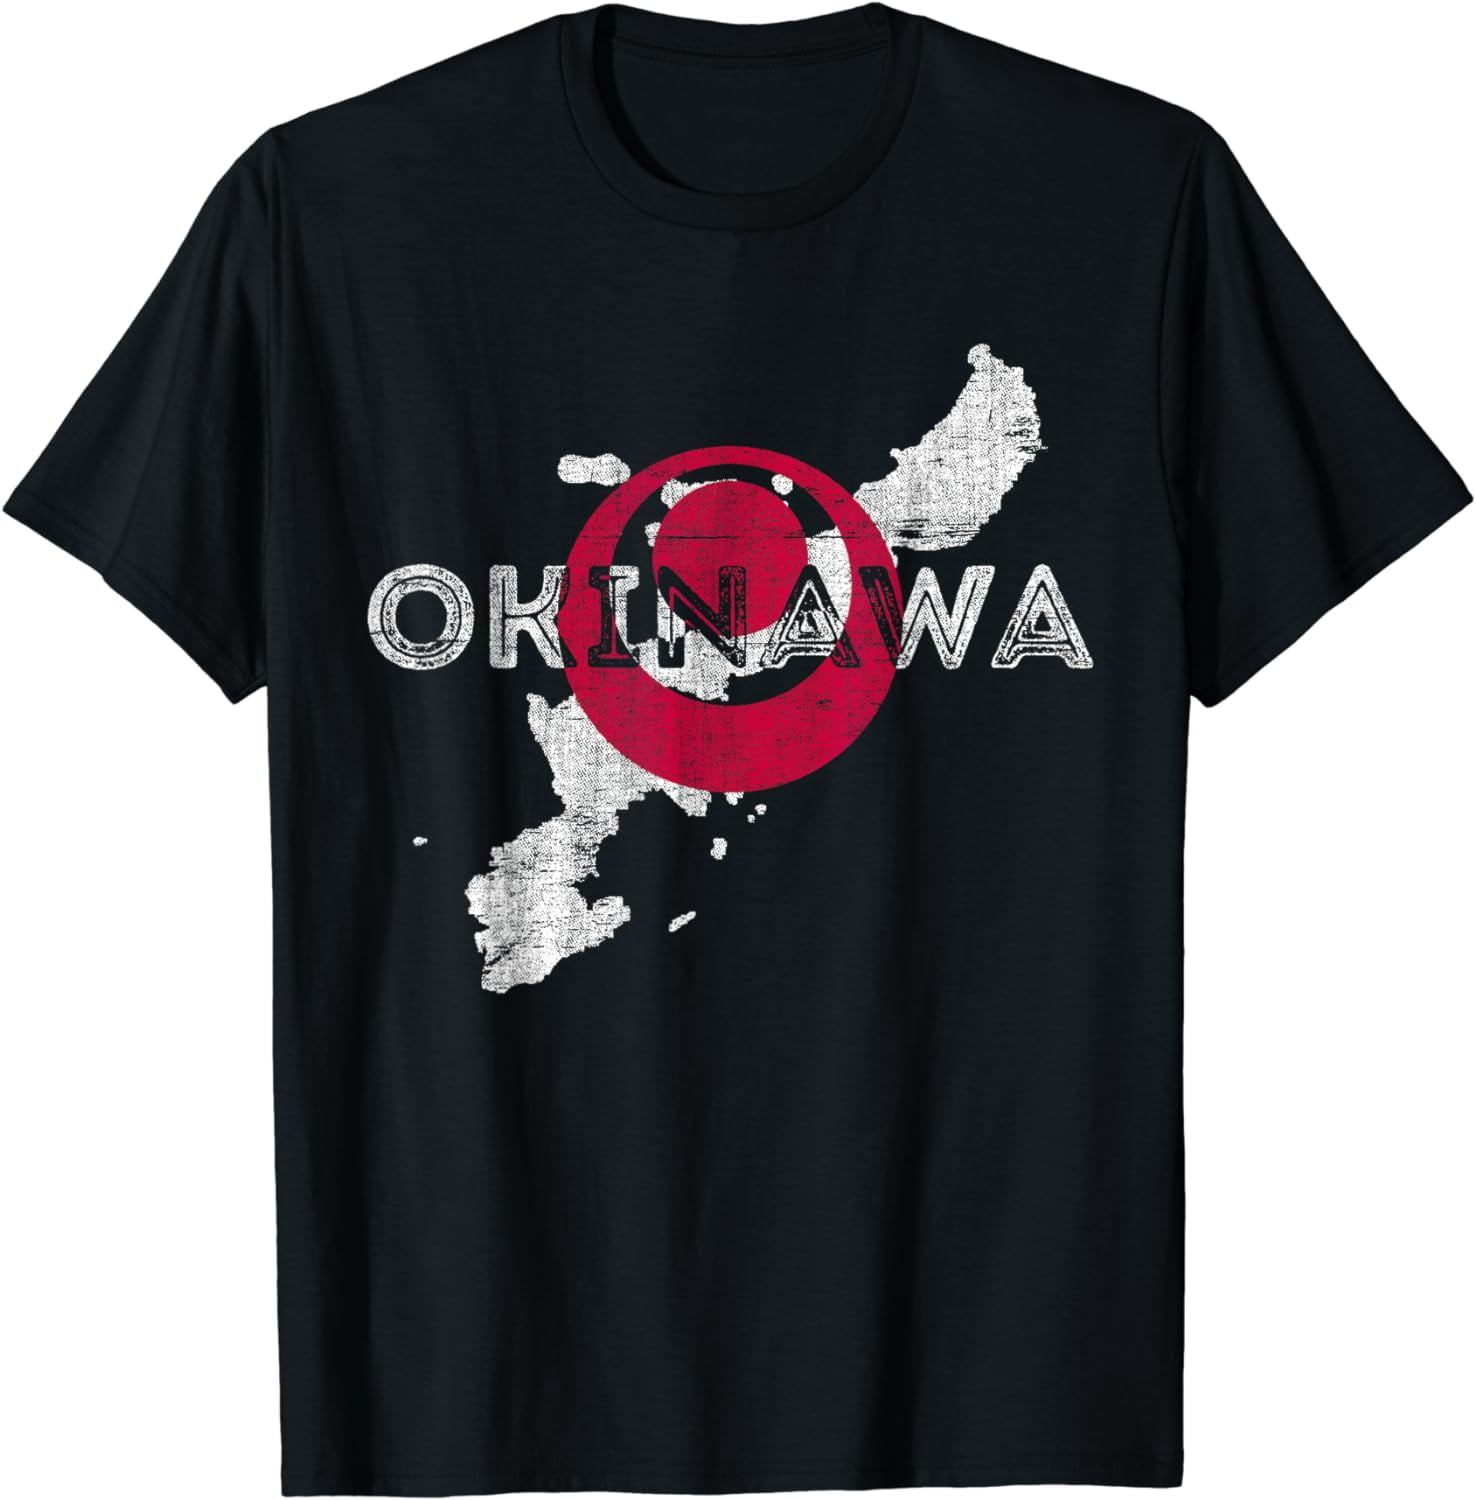 Okinawa Map and Flag - Distressed Japan Souvenir T-Shirt - Walmart.com